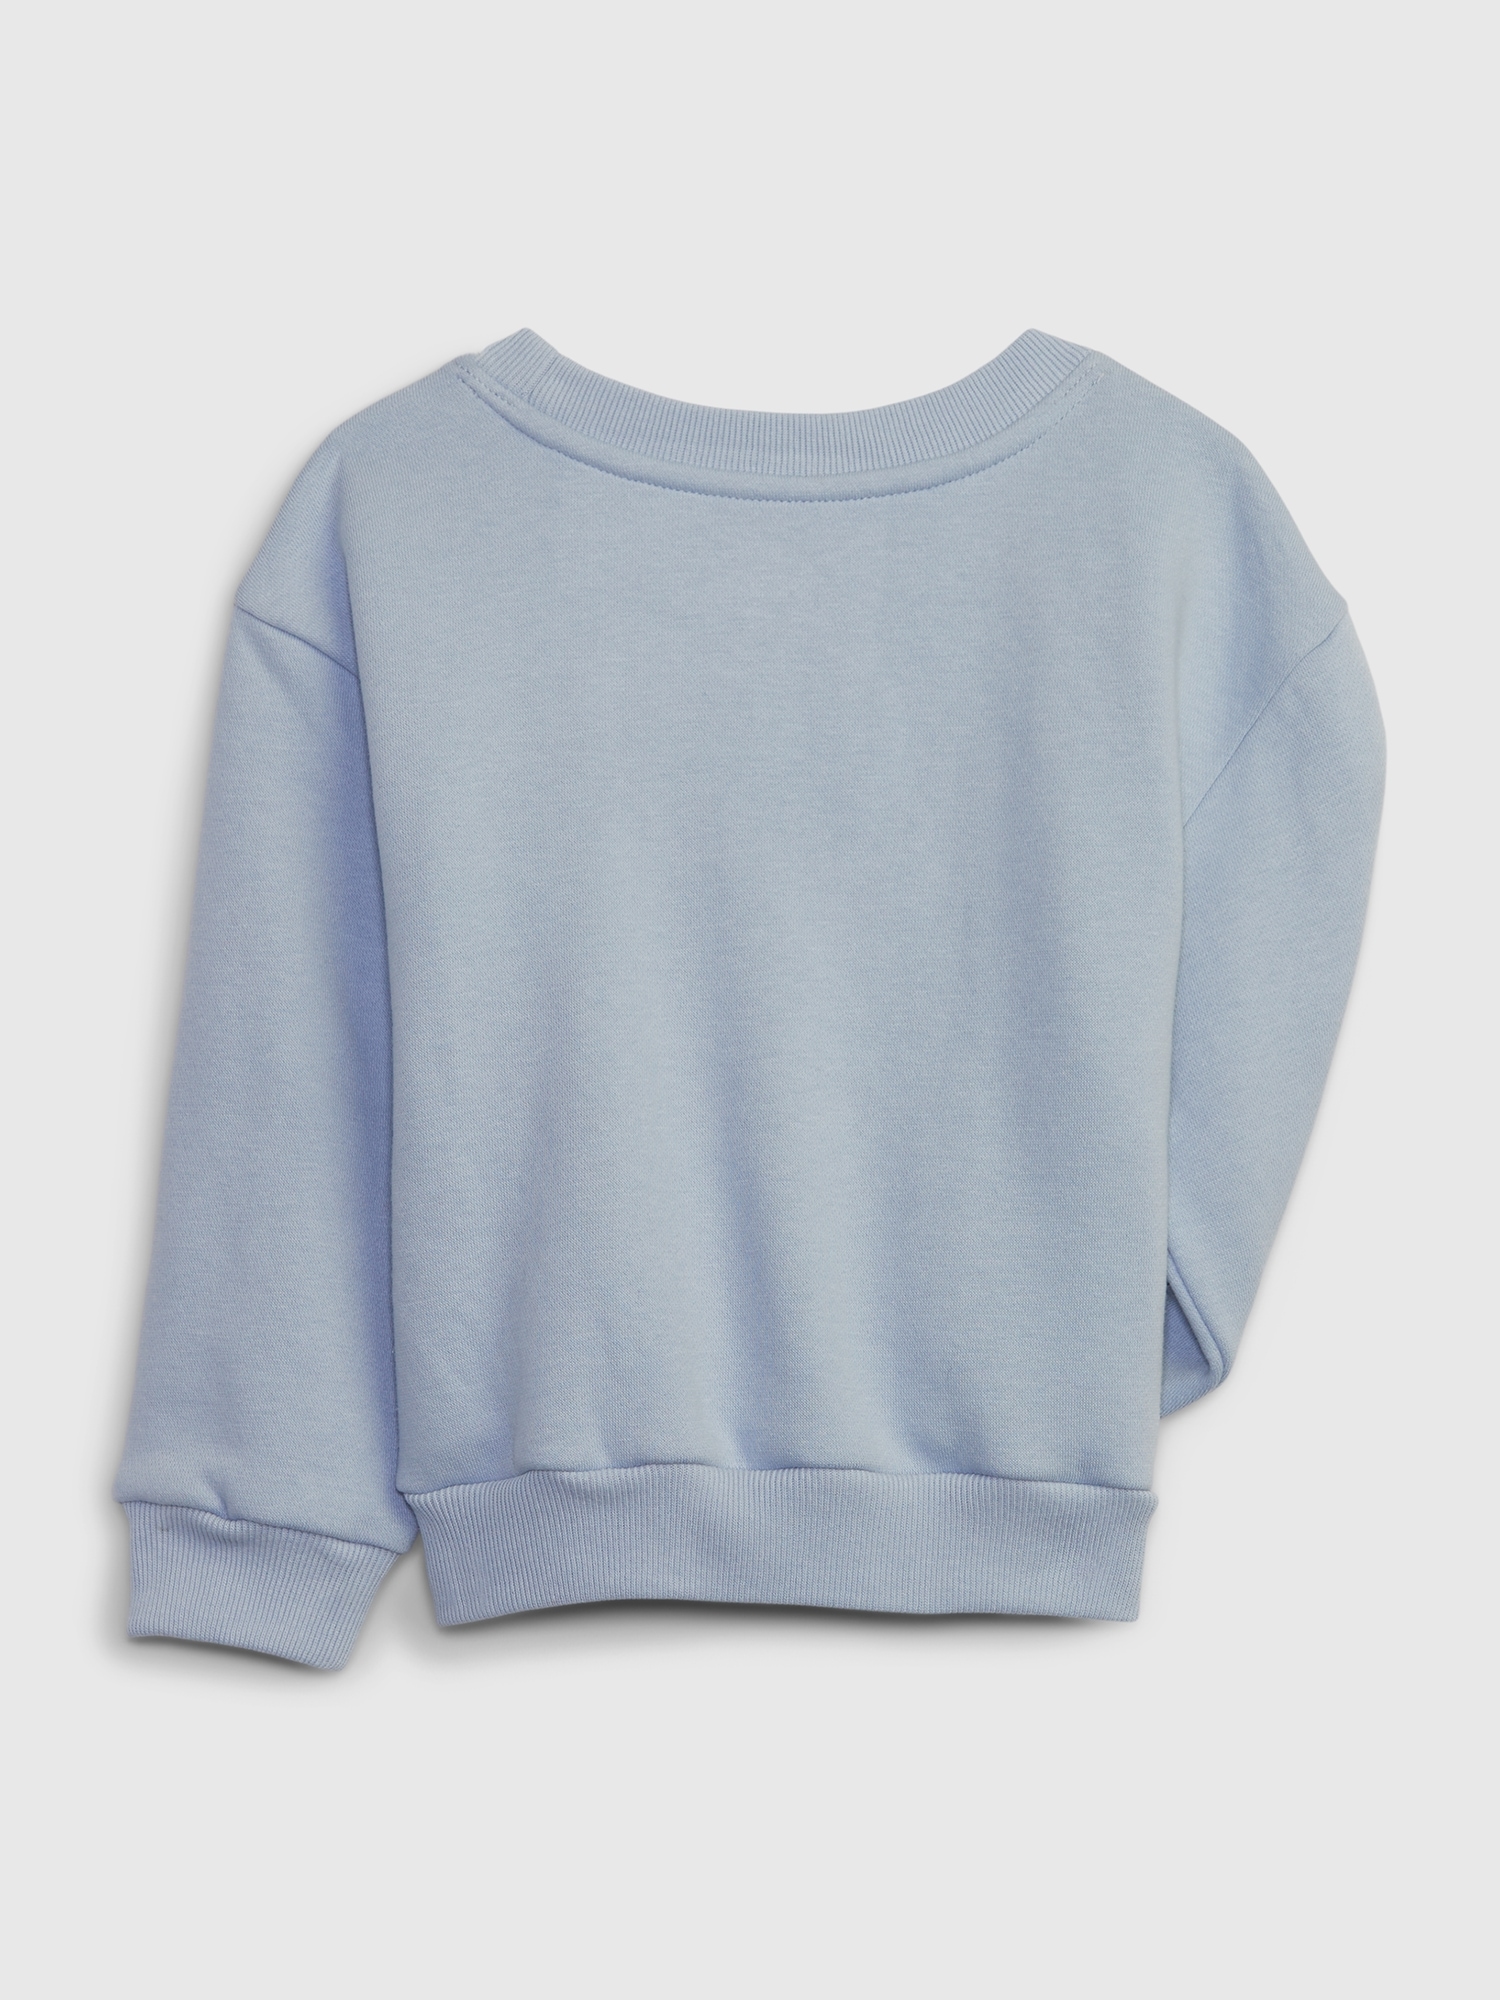 babyGap | Disney Crewneck Sweatshirt | Gap